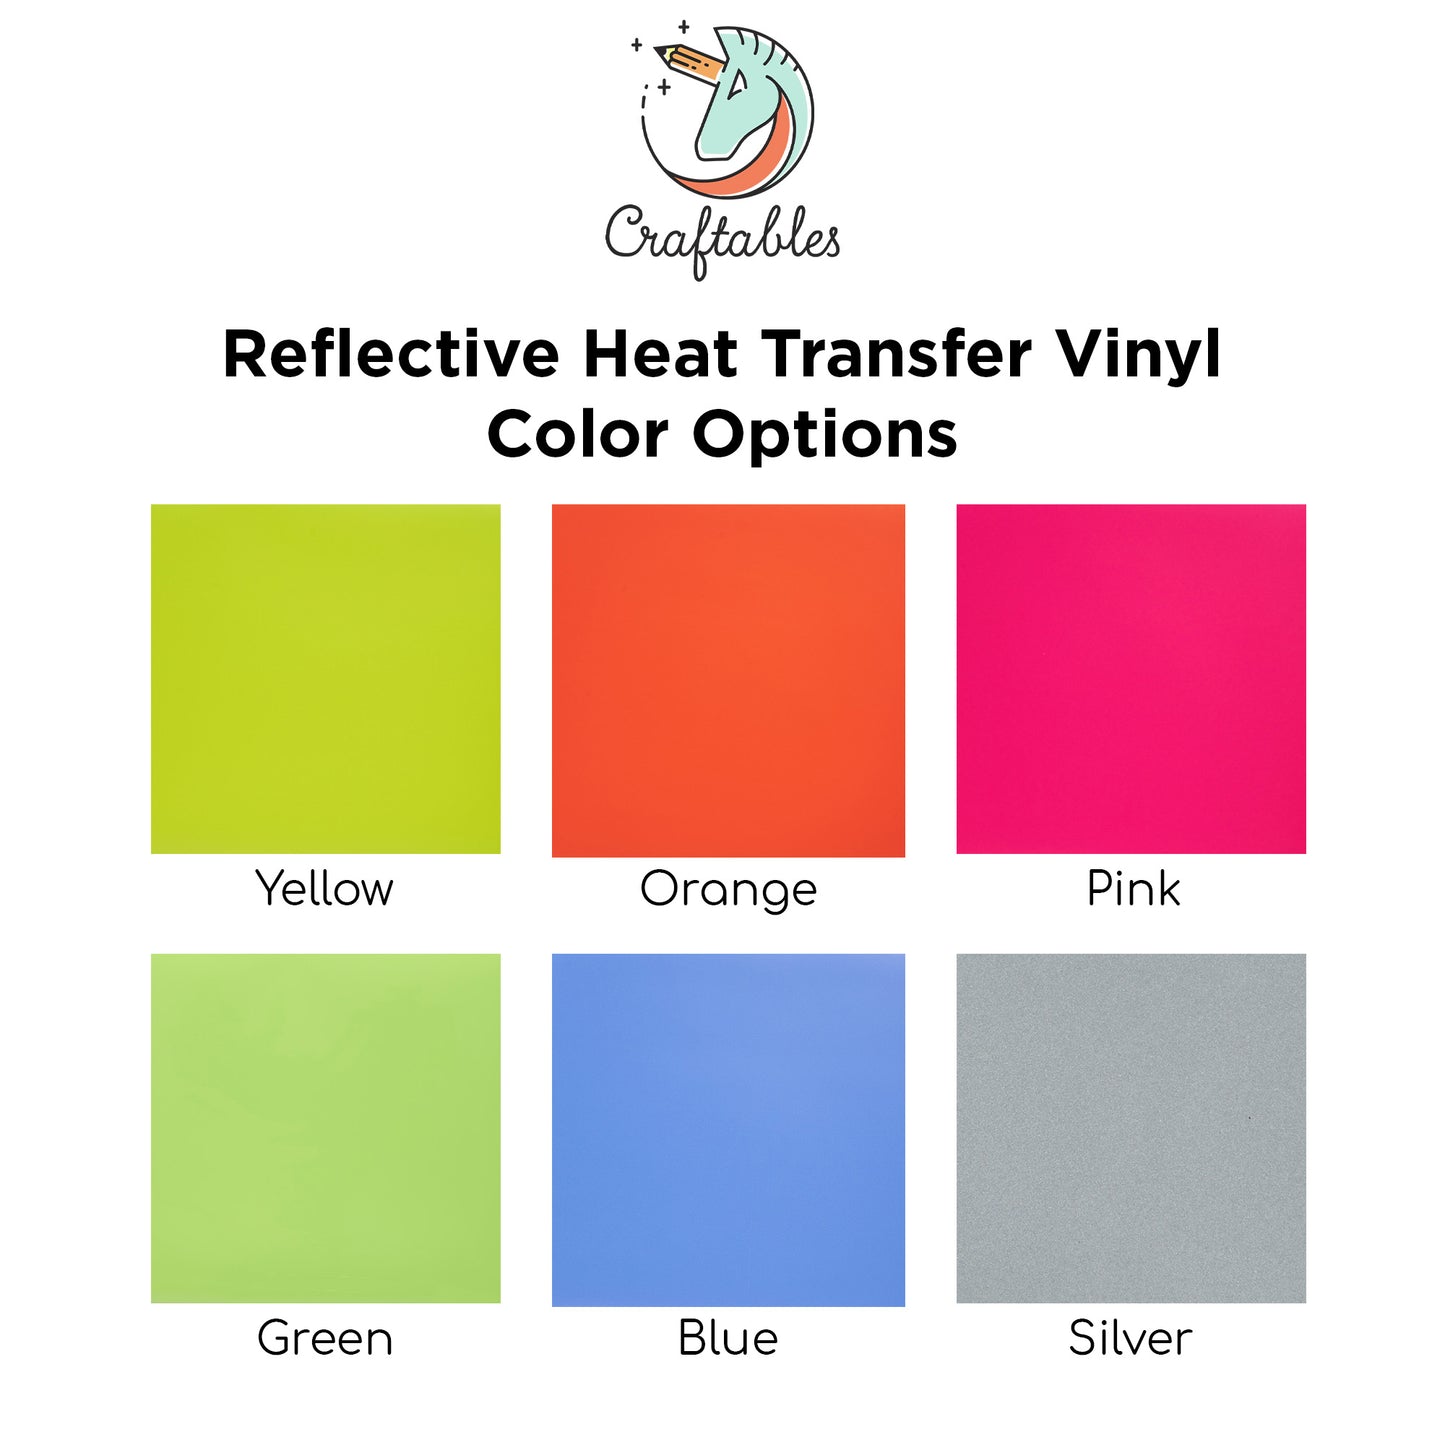 Blue Reflective Heat Transfer Vinyl Rolls By Craftables